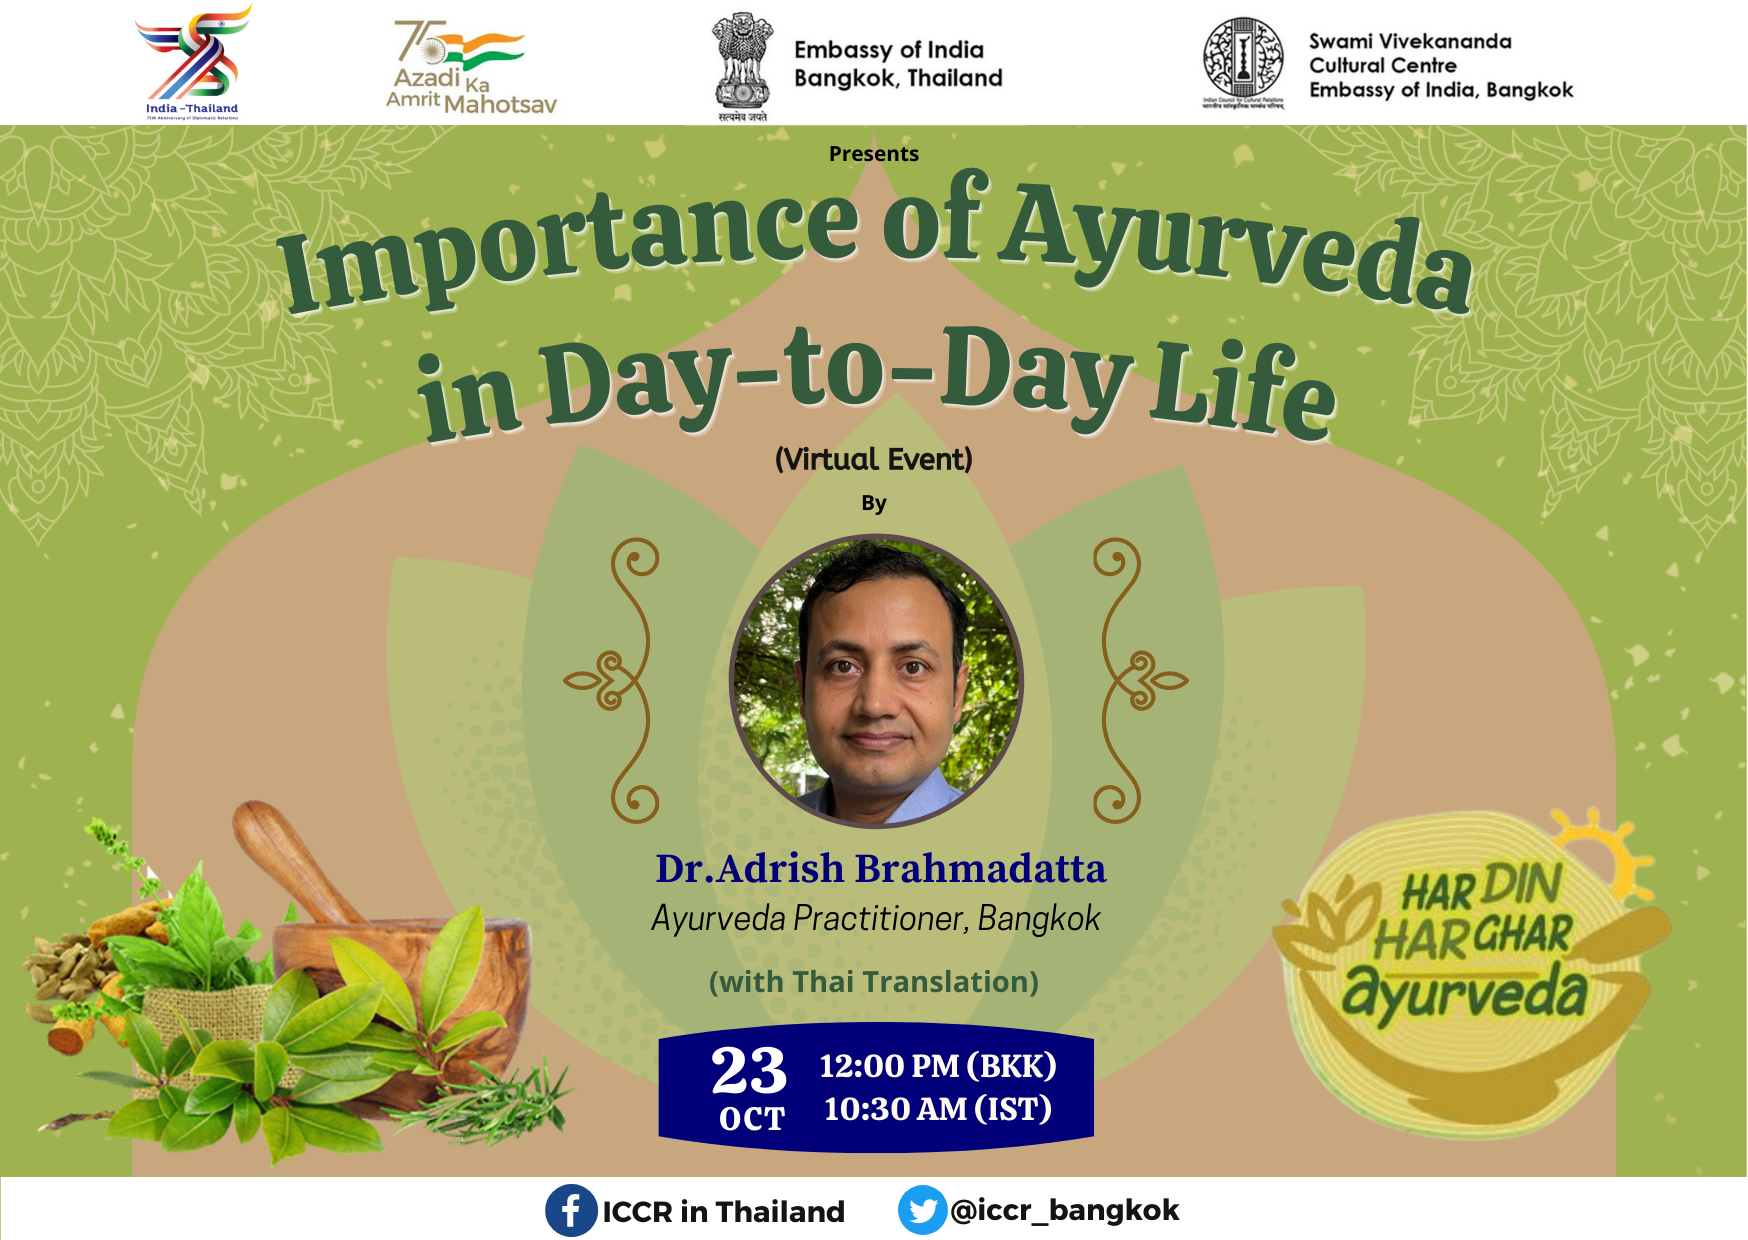 Talk on "Ayurveda in Day-to-Day Life" under the theme "Har Din Har Ghar Ayurveda" by Dr. Adrish Brahamdatta, Ayurveda